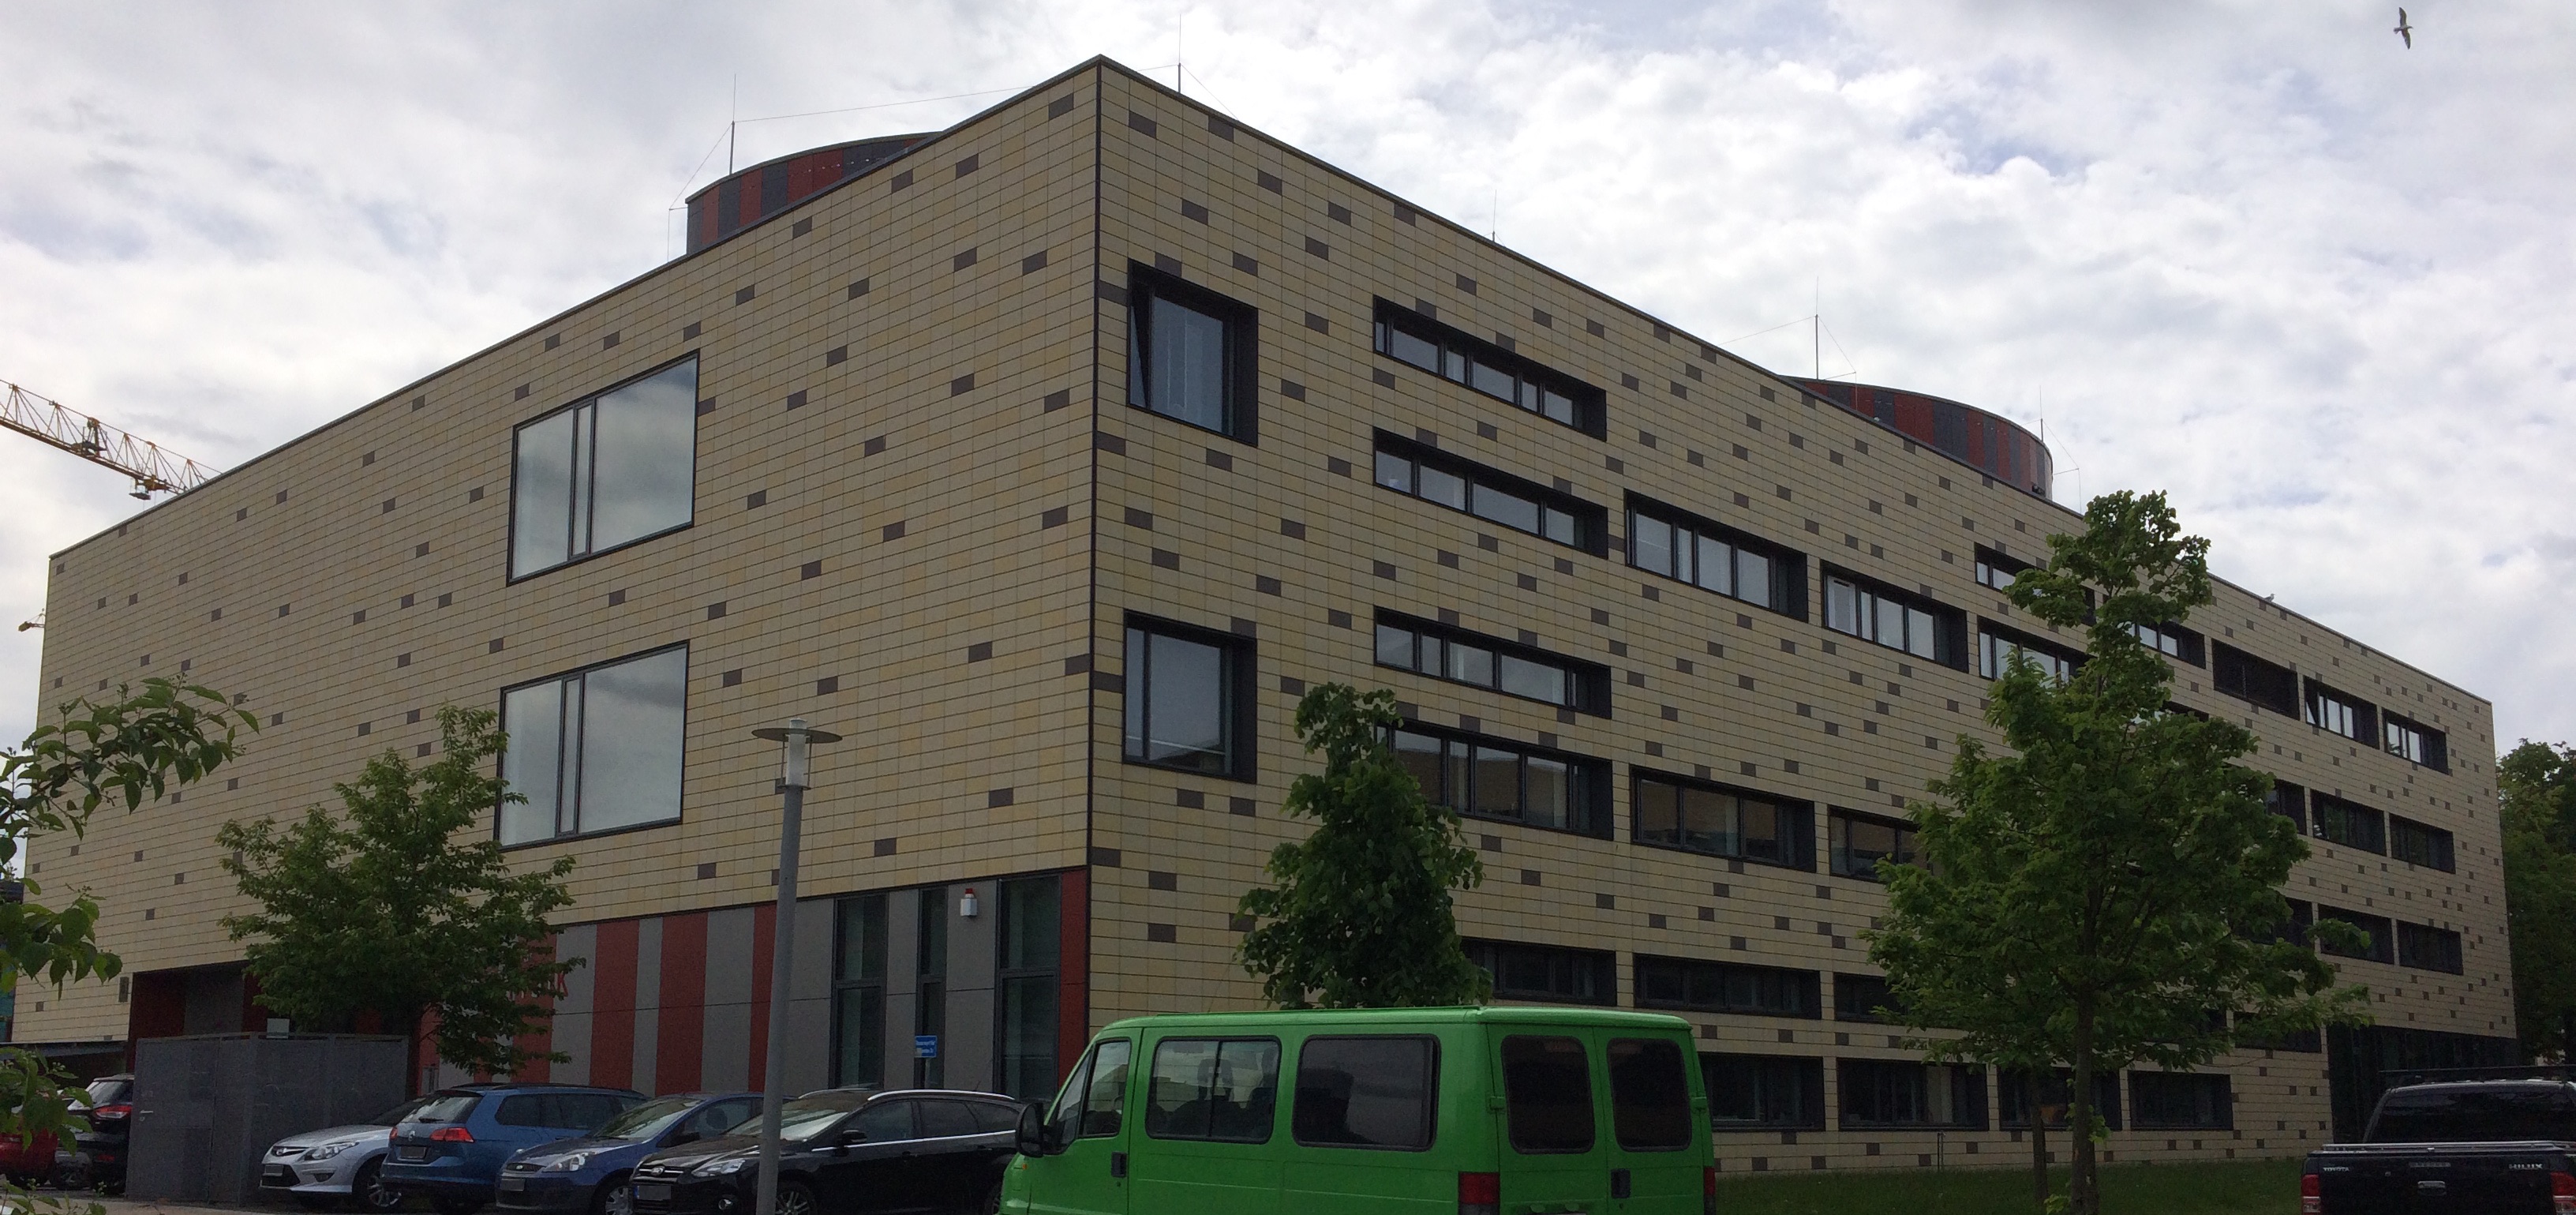 Physik Institut Greifswald.jpg